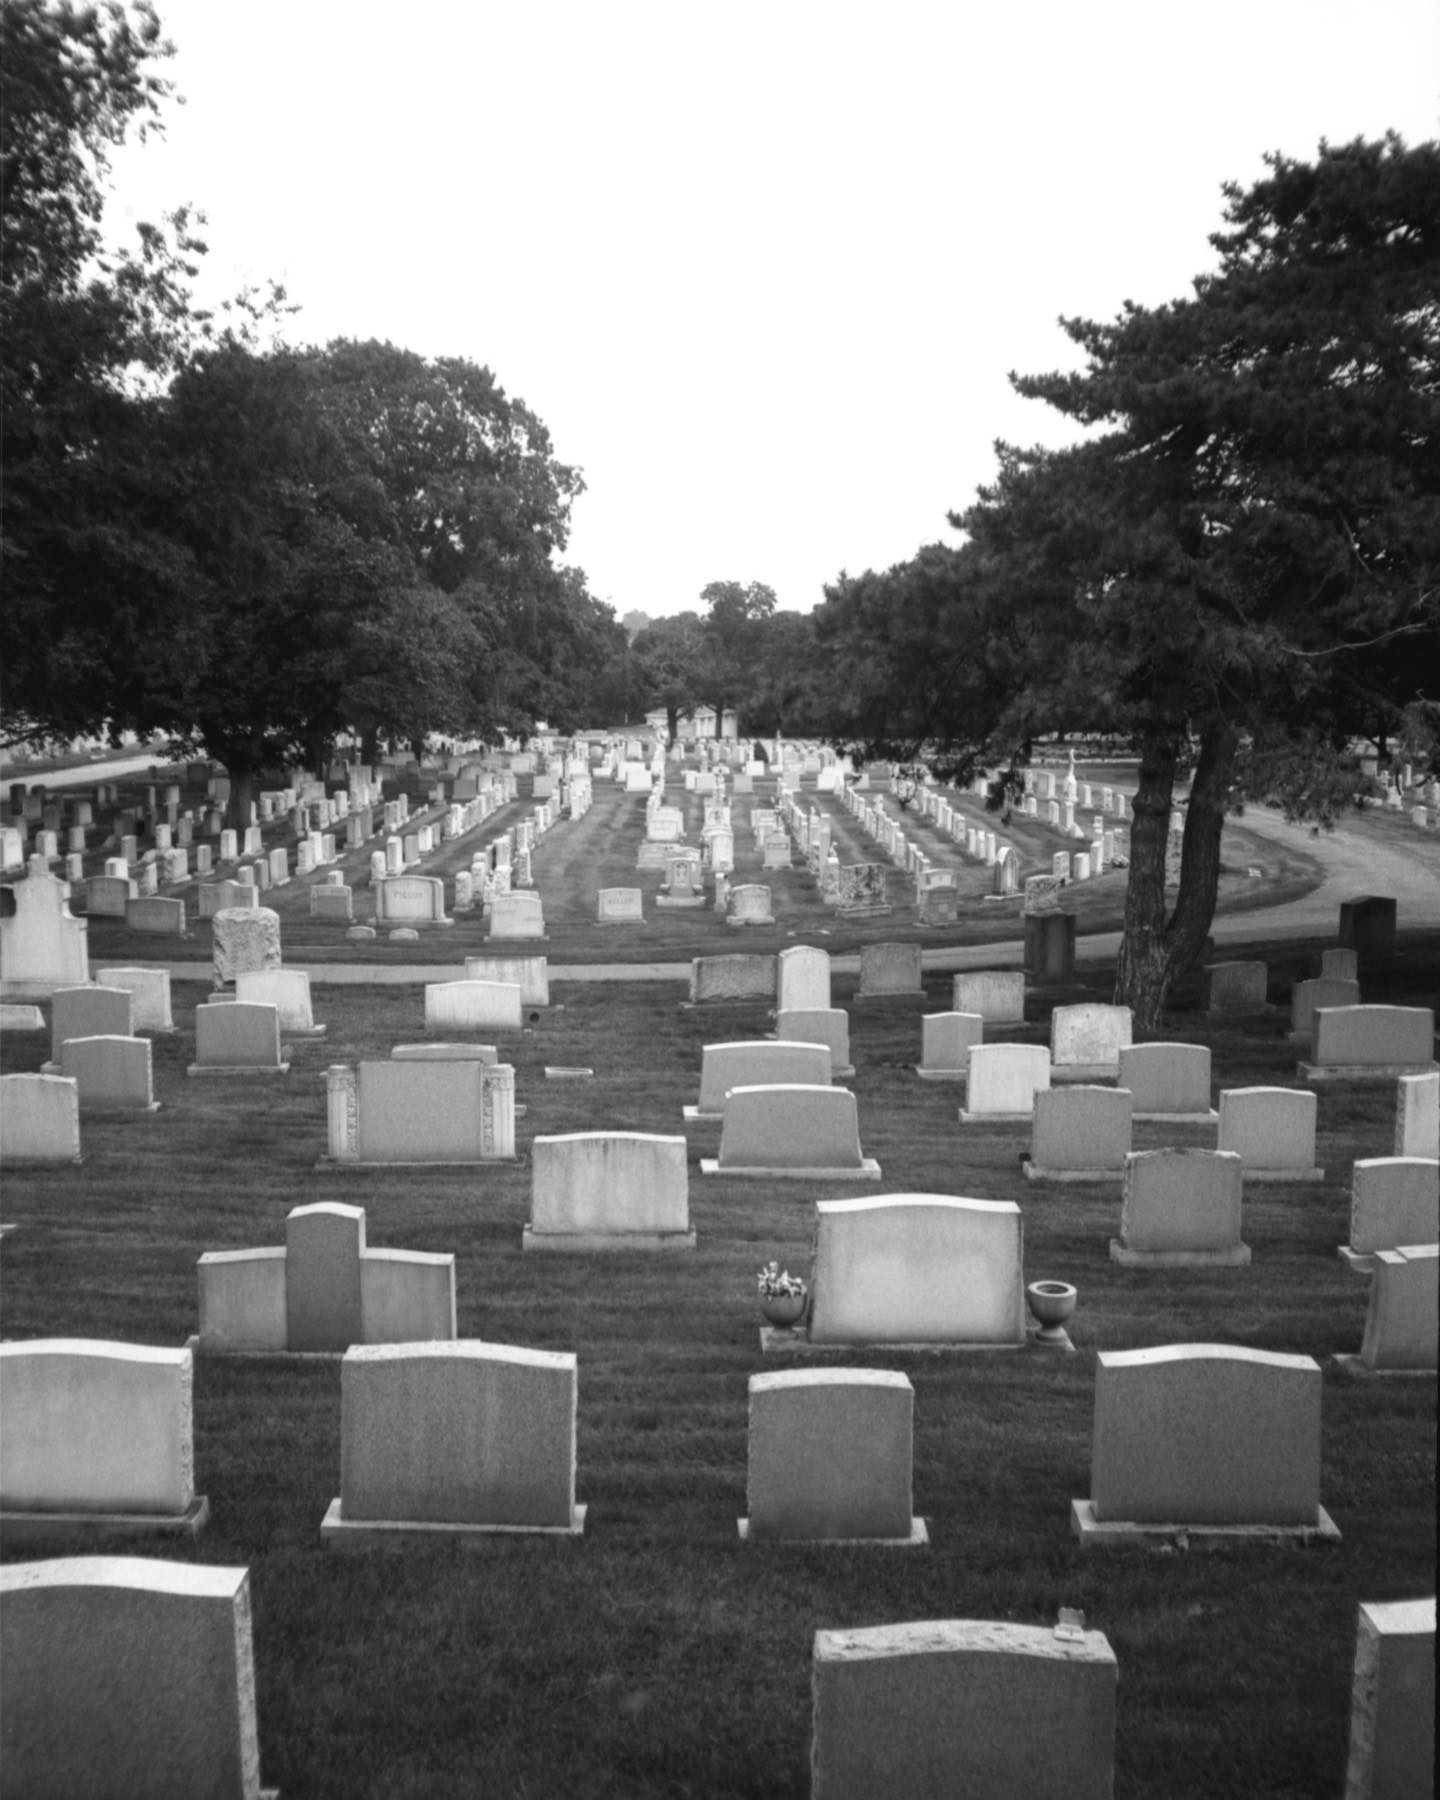 Calvary Cemetery, Paterson, NJ

#olympusxa #p30film #rodinal #cemetery #tombstones #film #filmphotography #filmphotographic #staybrokeshootfilm